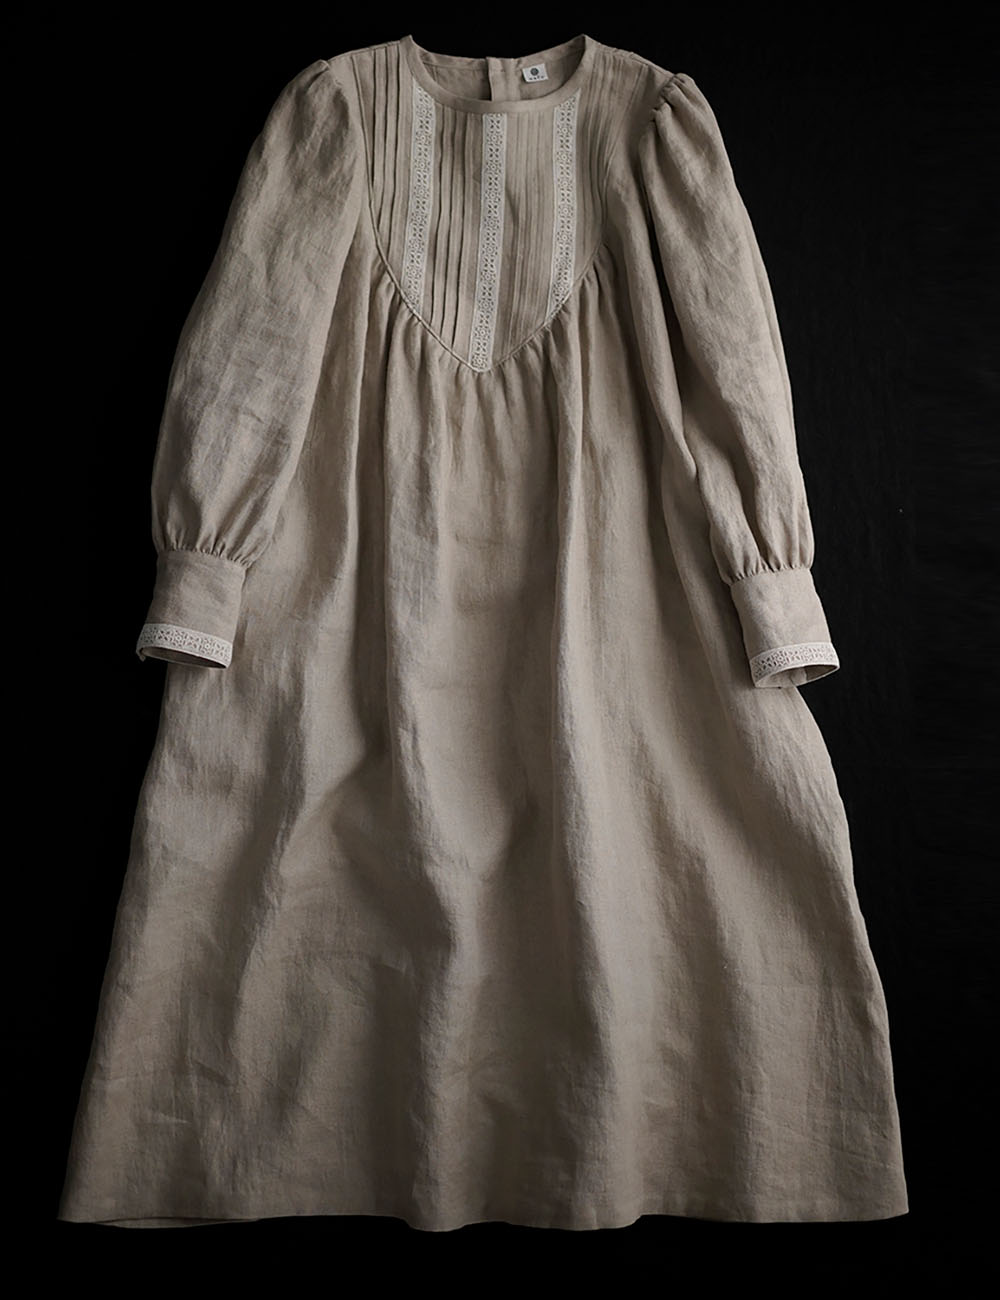 【wafu】Portman (ポートマン)  Embroidered Linen Pintuck Dress リネンドレス ピンタック mokubaレース  / a014c